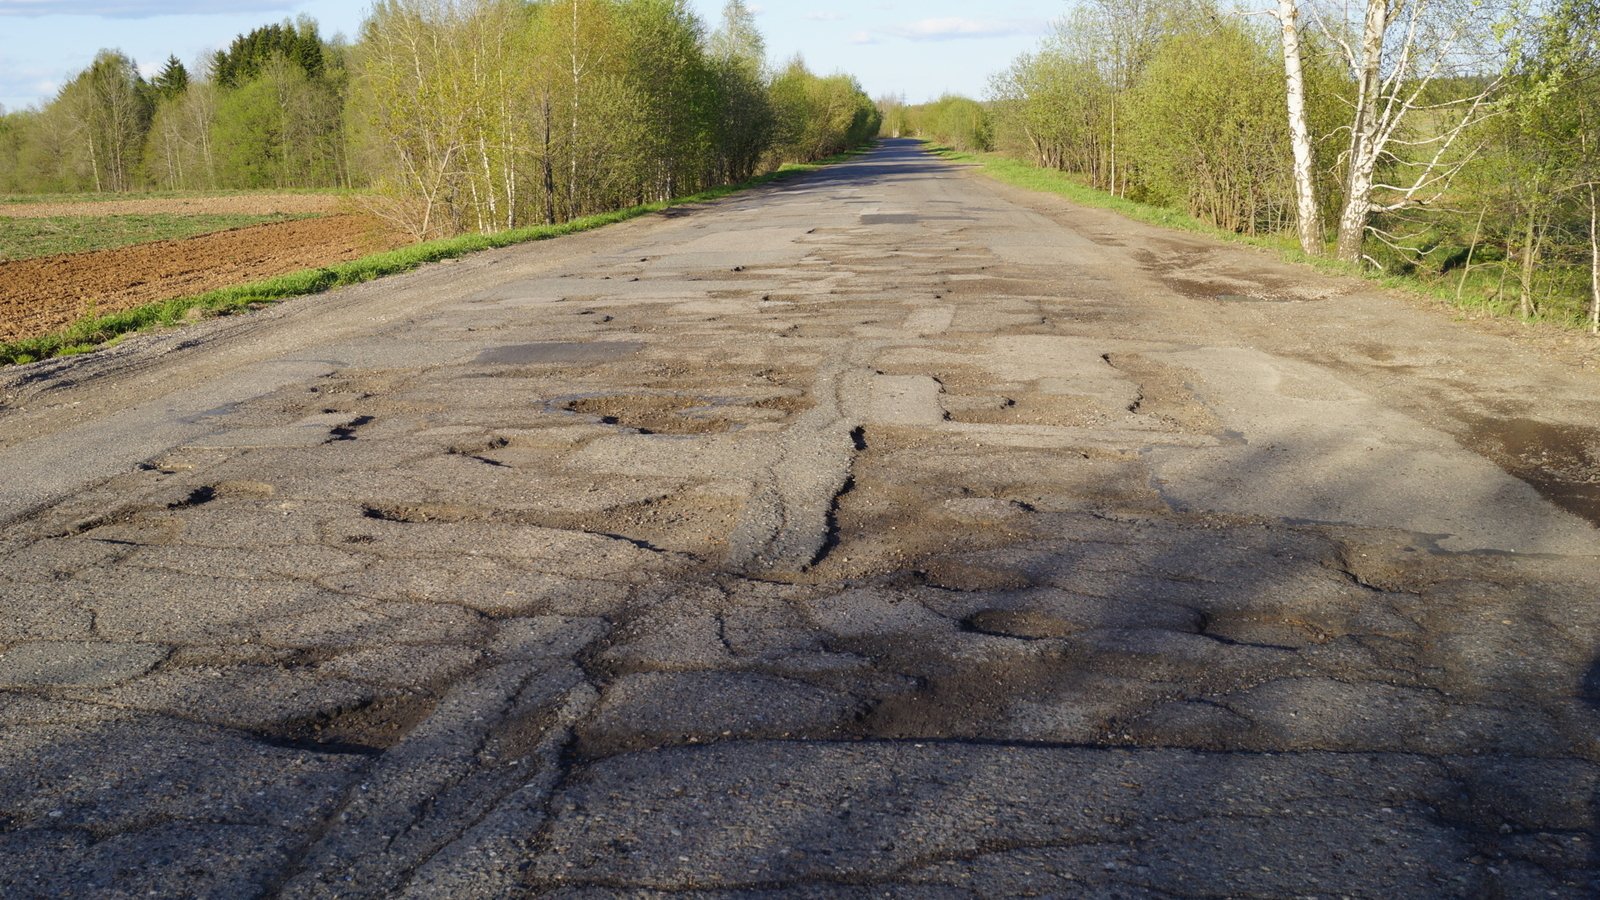 Плохое качество дороги. Плохие дороги. Дороги России. Разбитая дорога. Плохая дорога.